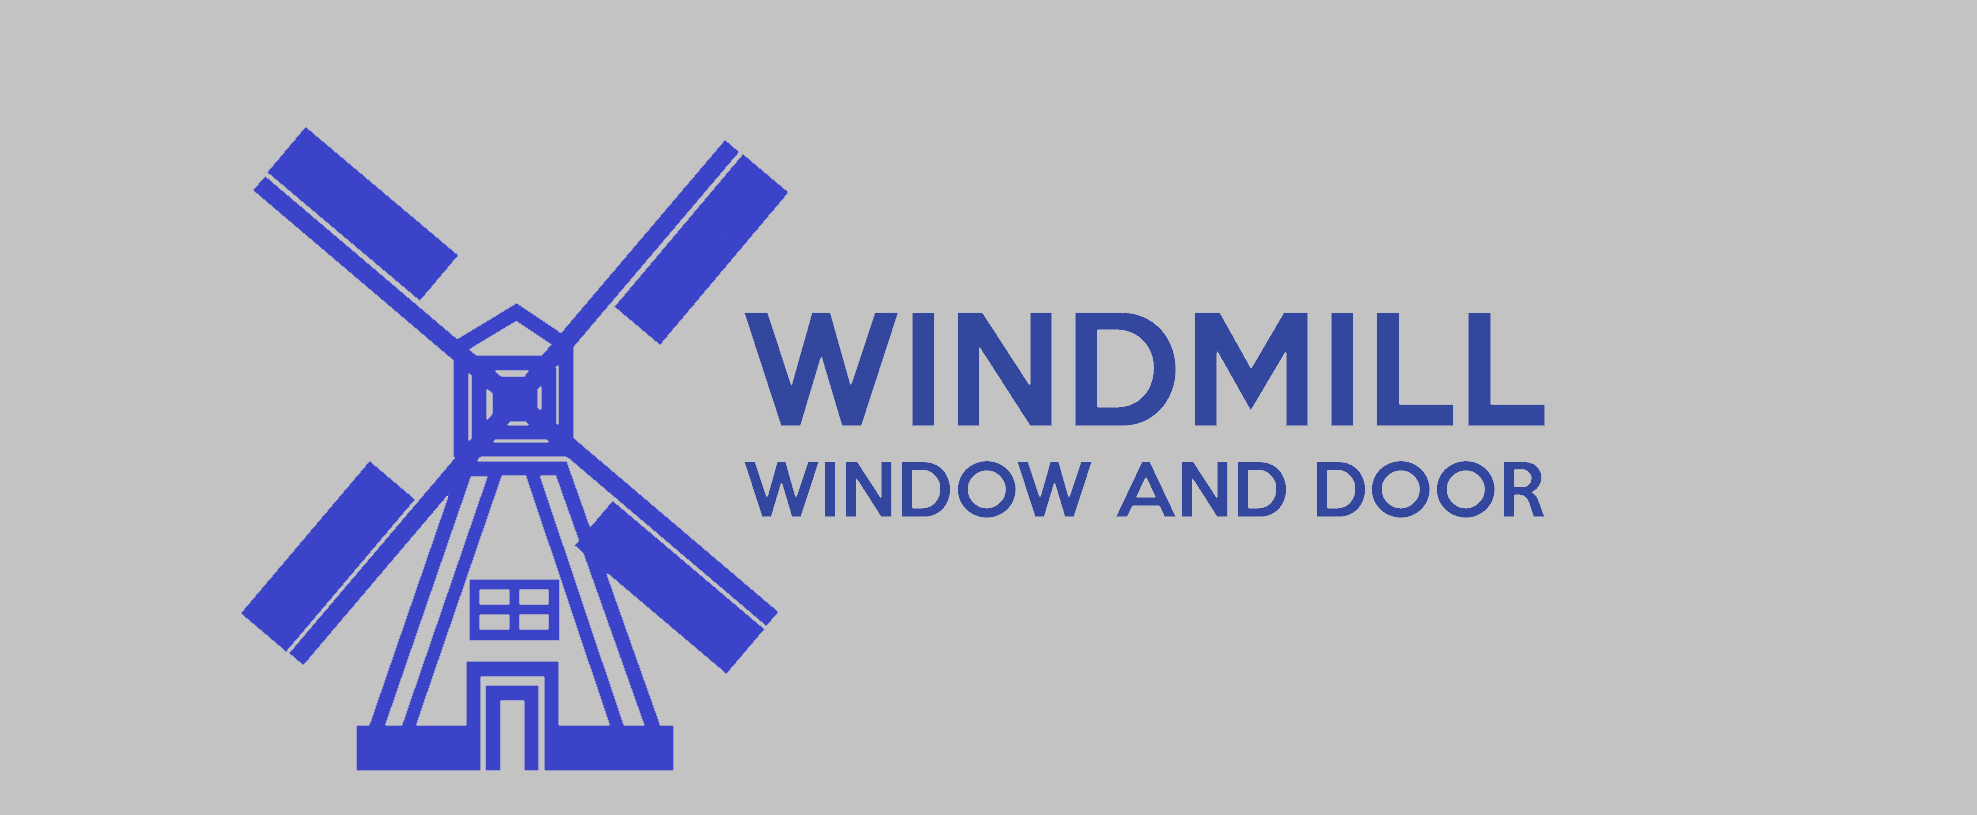 Windmill Window and Doors 